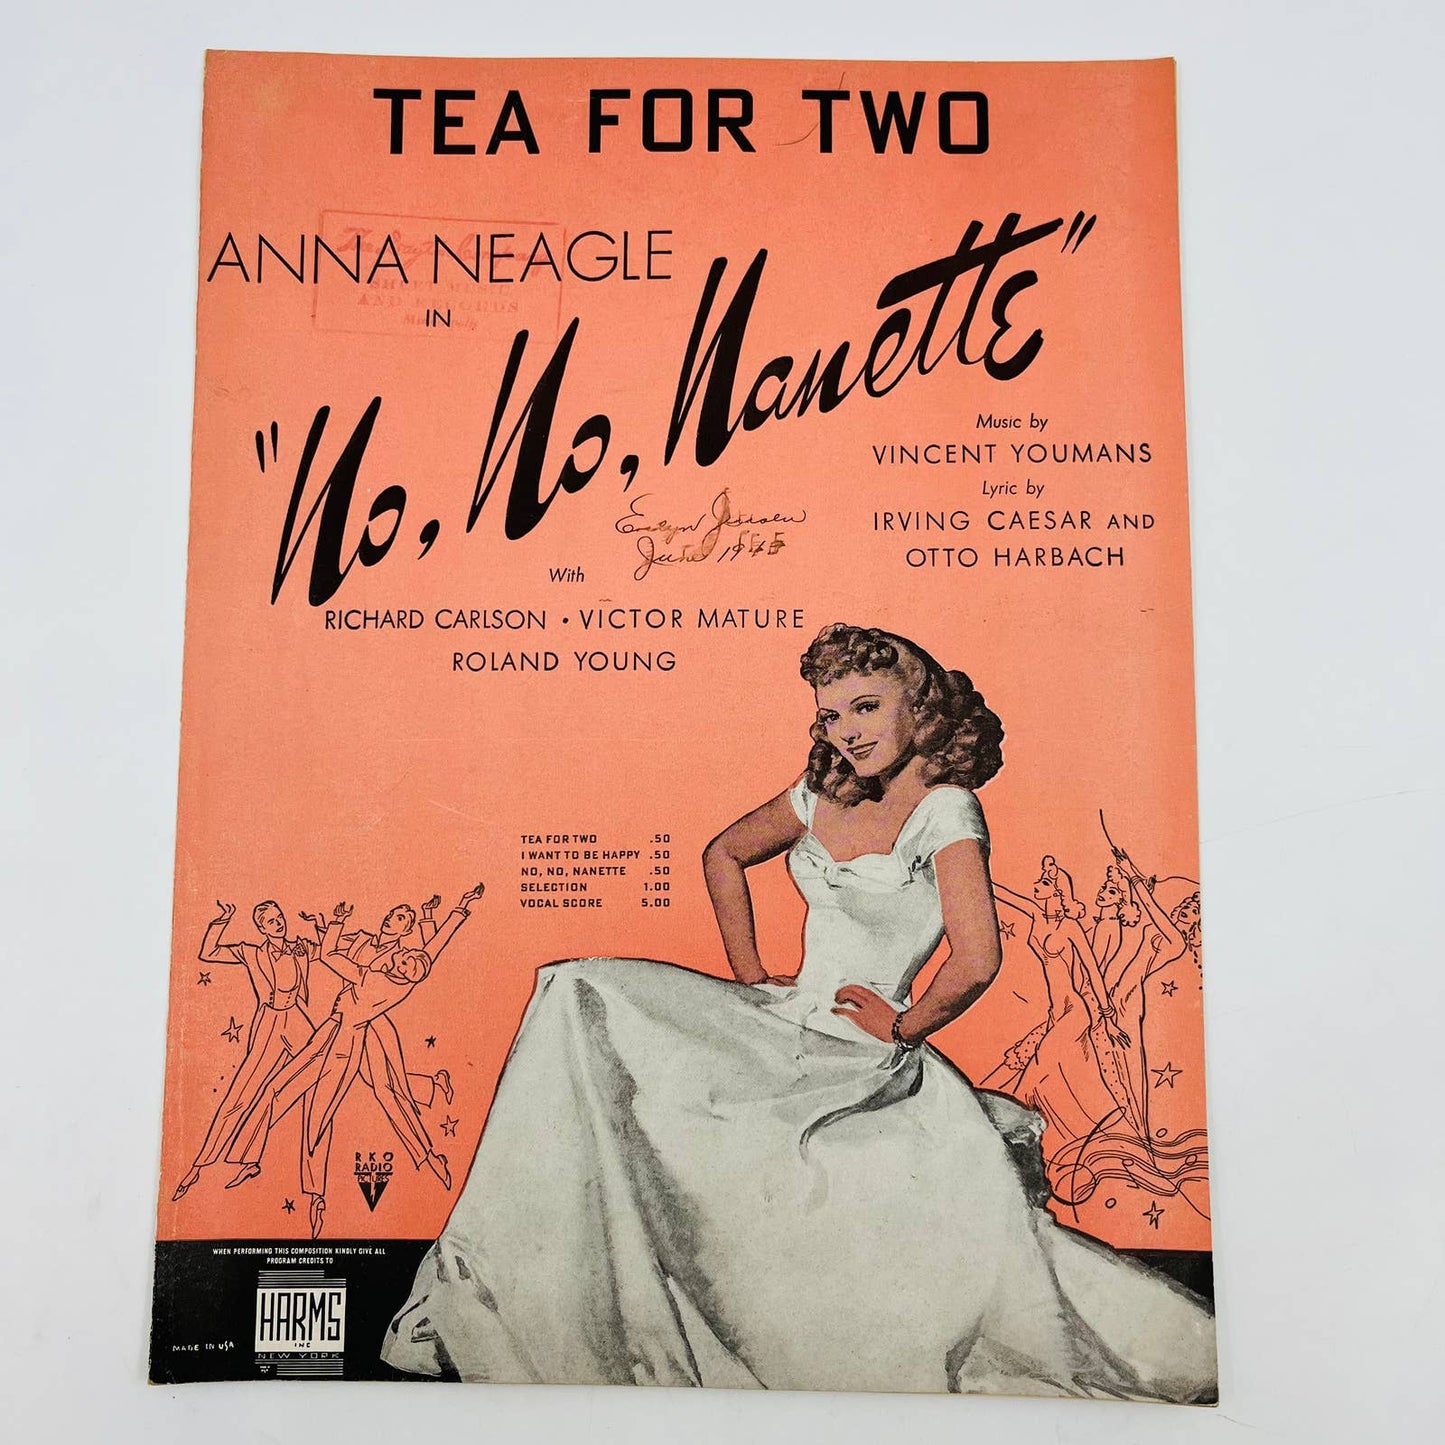 1924 Tea for Two Anna Neagle No, No, Nanette Vincent Youman Sheet Music